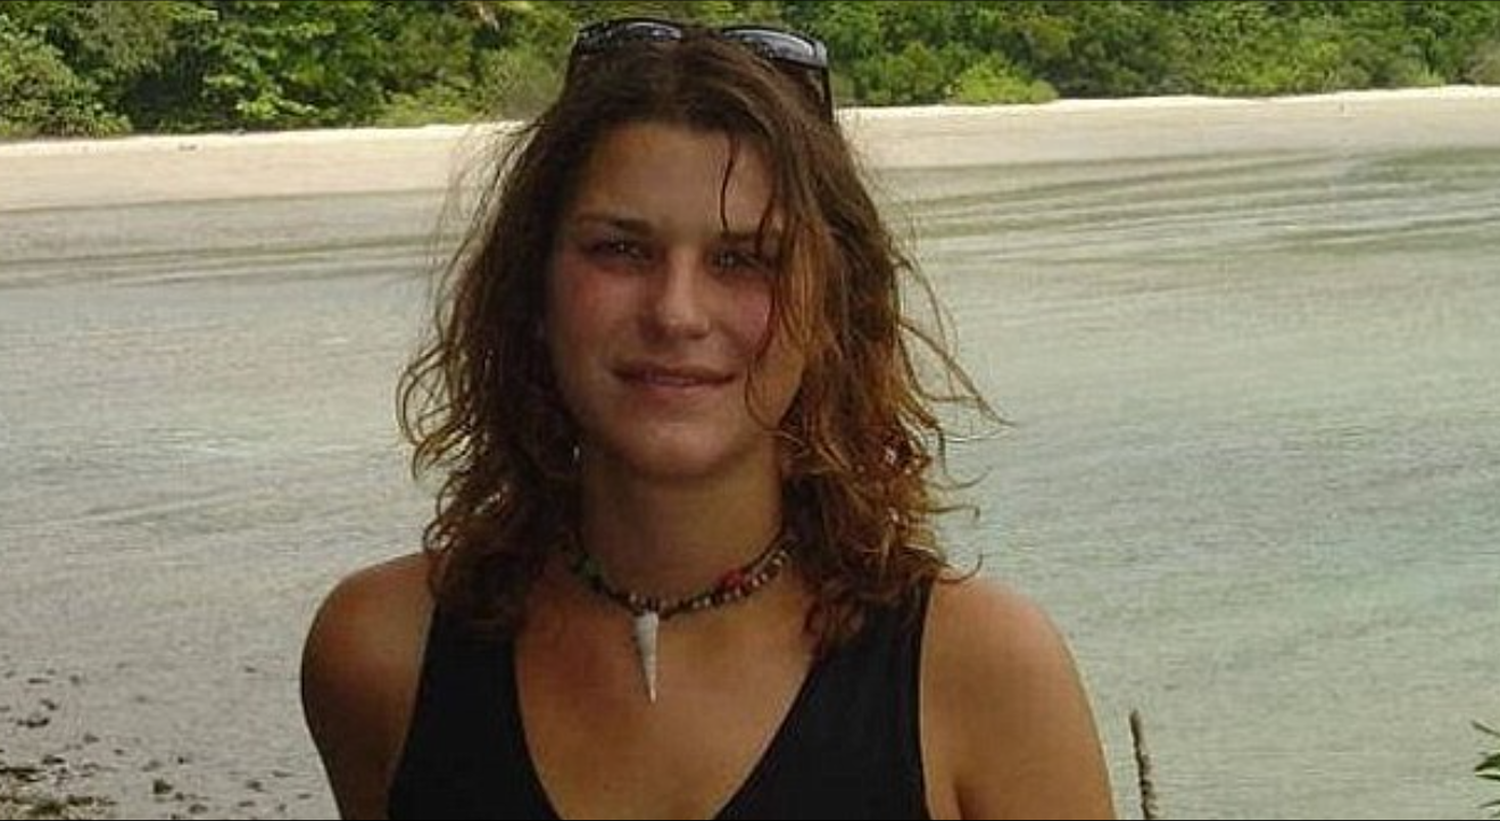 German backpacker Simone Strobel was found dead in Lismore in 2005.